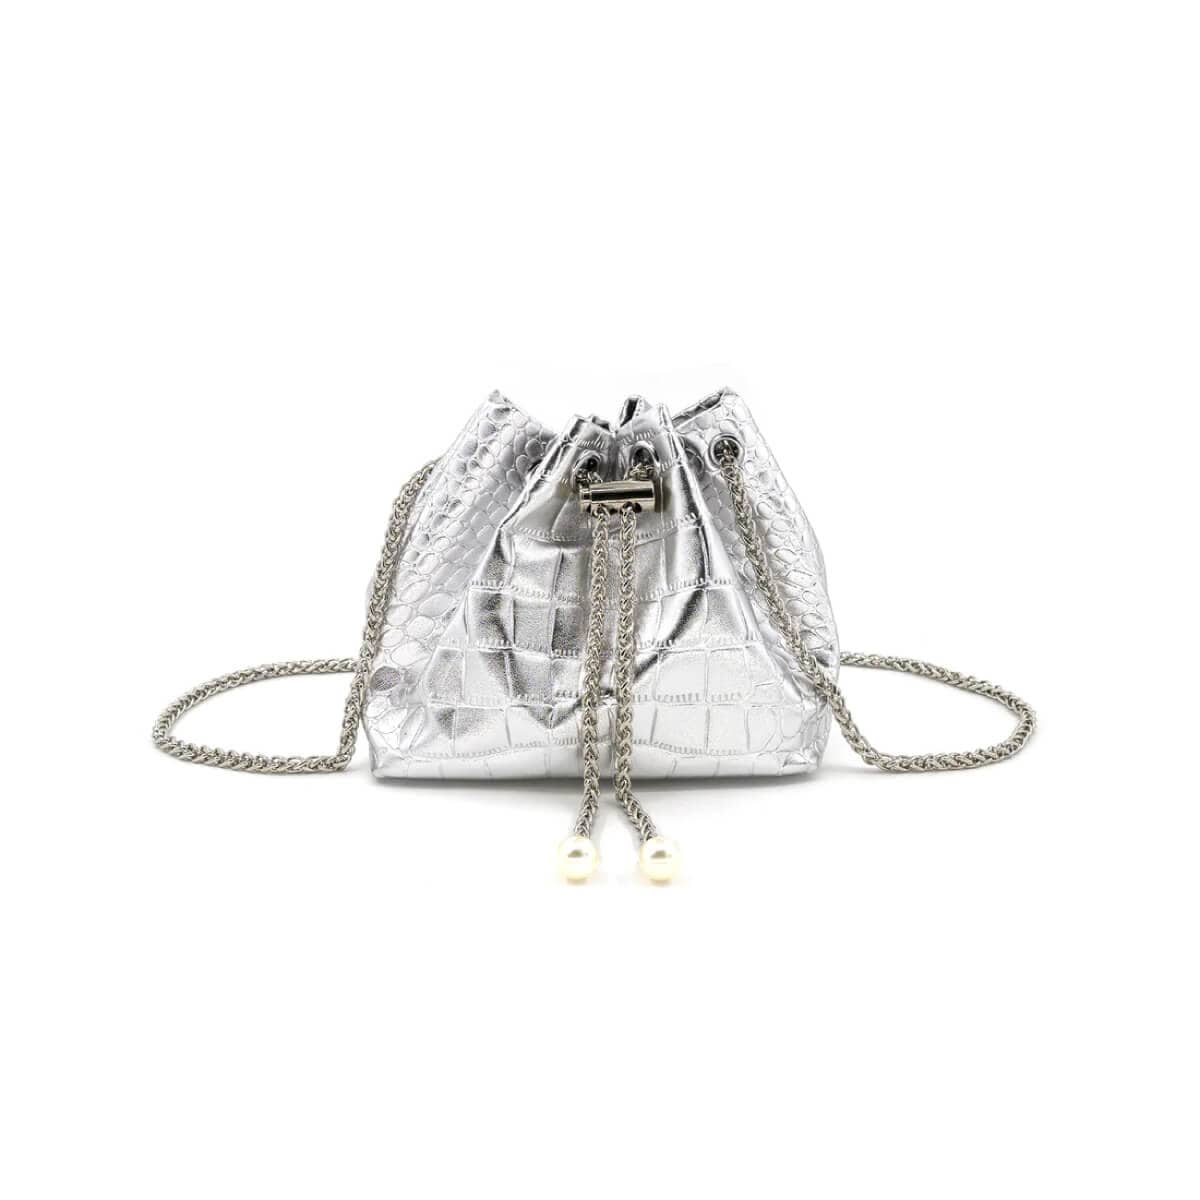 Fashionable Embossed Fringe Chain Mini Shoulder Bag